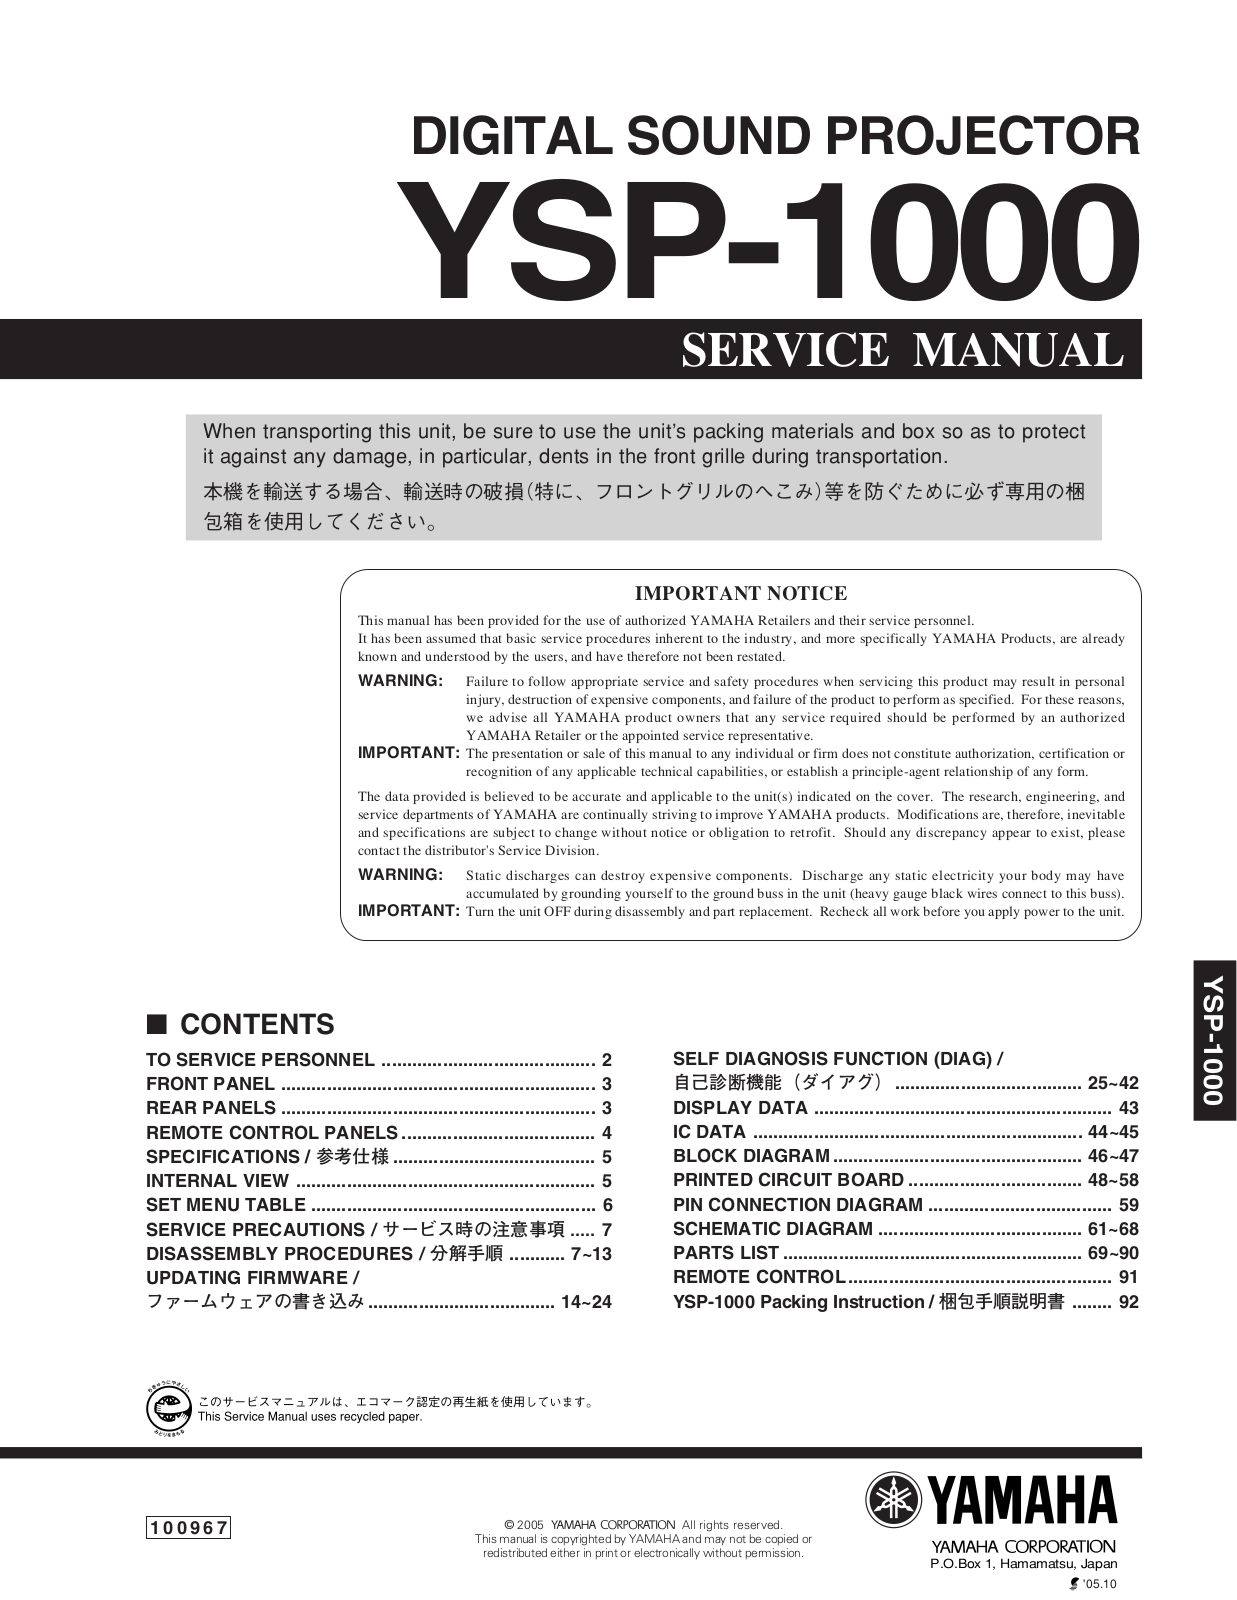 Yamaha YSP-1000 Service manual